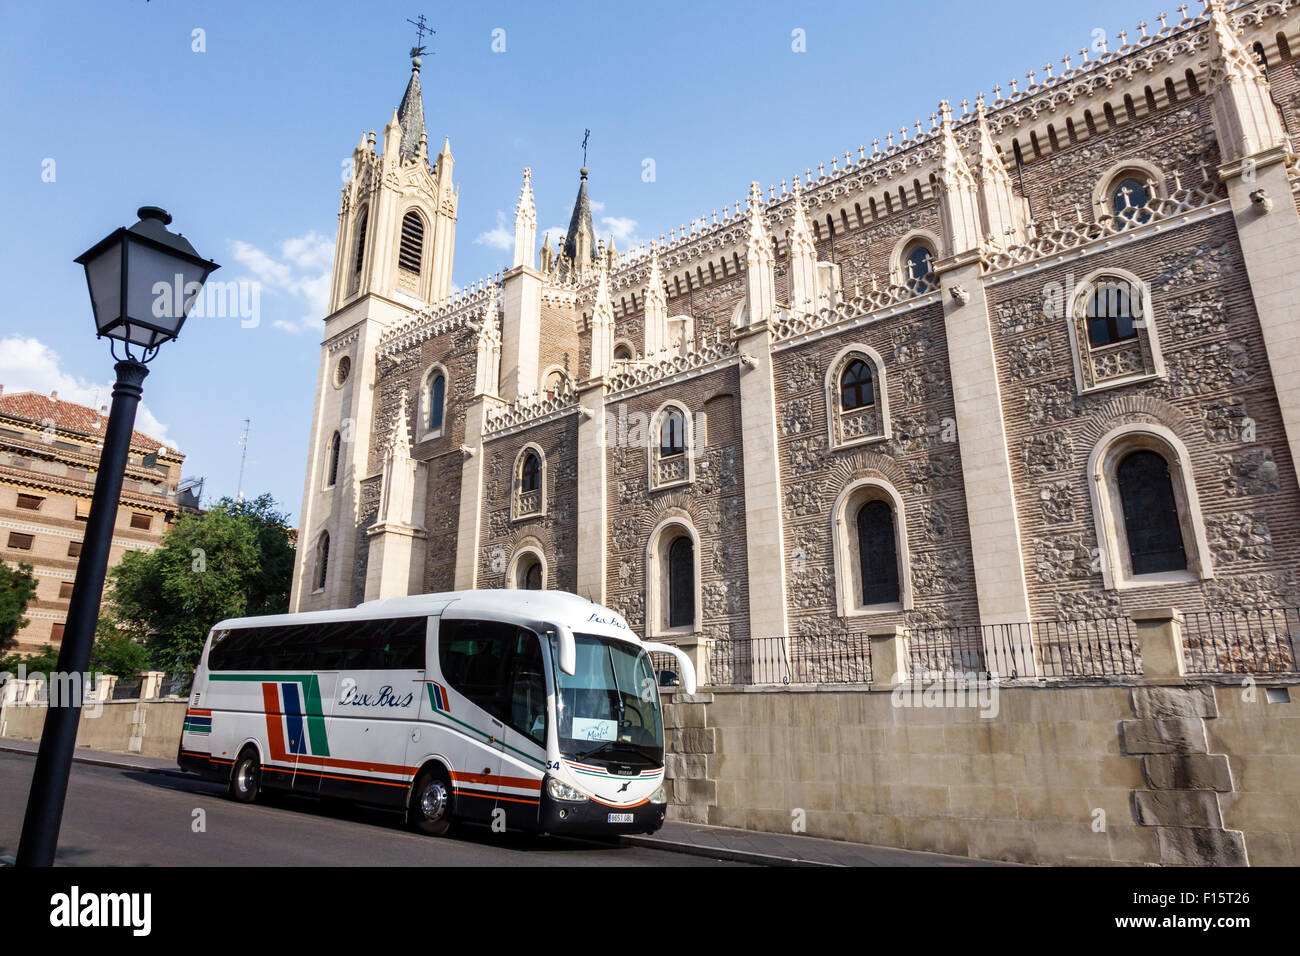 Madrid Spain,Hispanic Retiro,San Jeronimo el Real,St. Jerome Royal Church,Roman Catholic church,religion,16th-century,Gothic,architecture exterior,bus Stock Photo